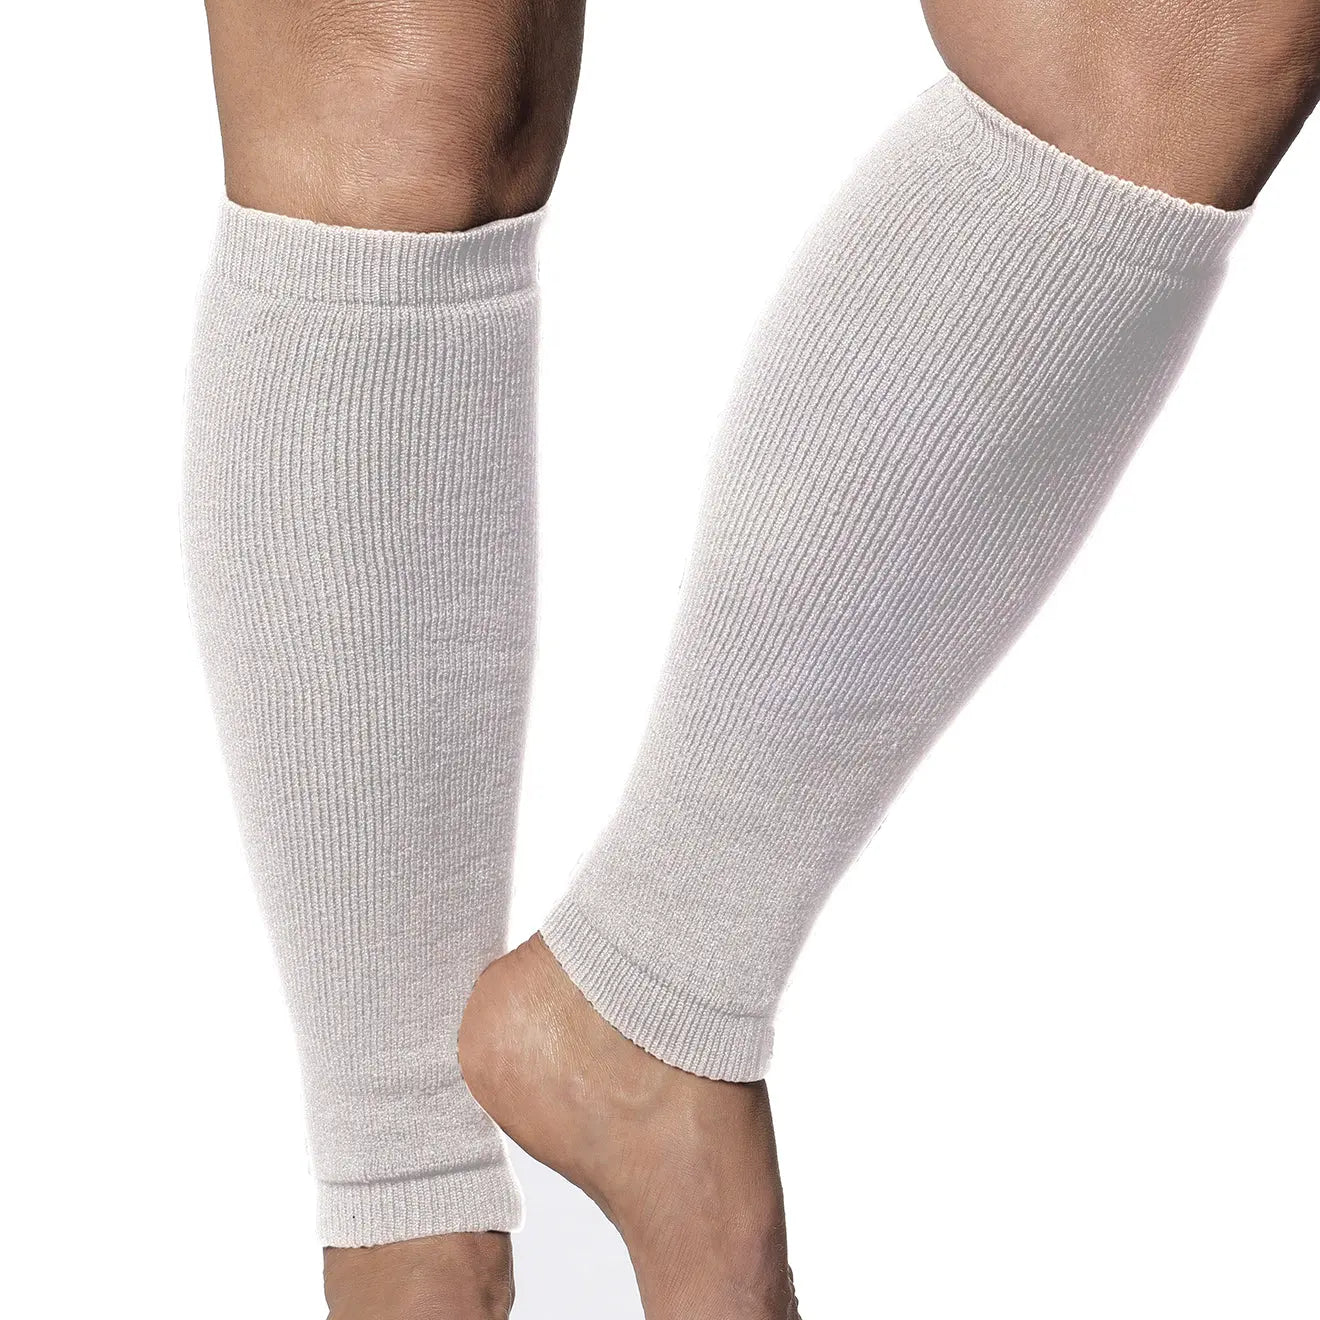 Leg Sleeves - RegularHeavy Weight . Help fragile thin skin on legs